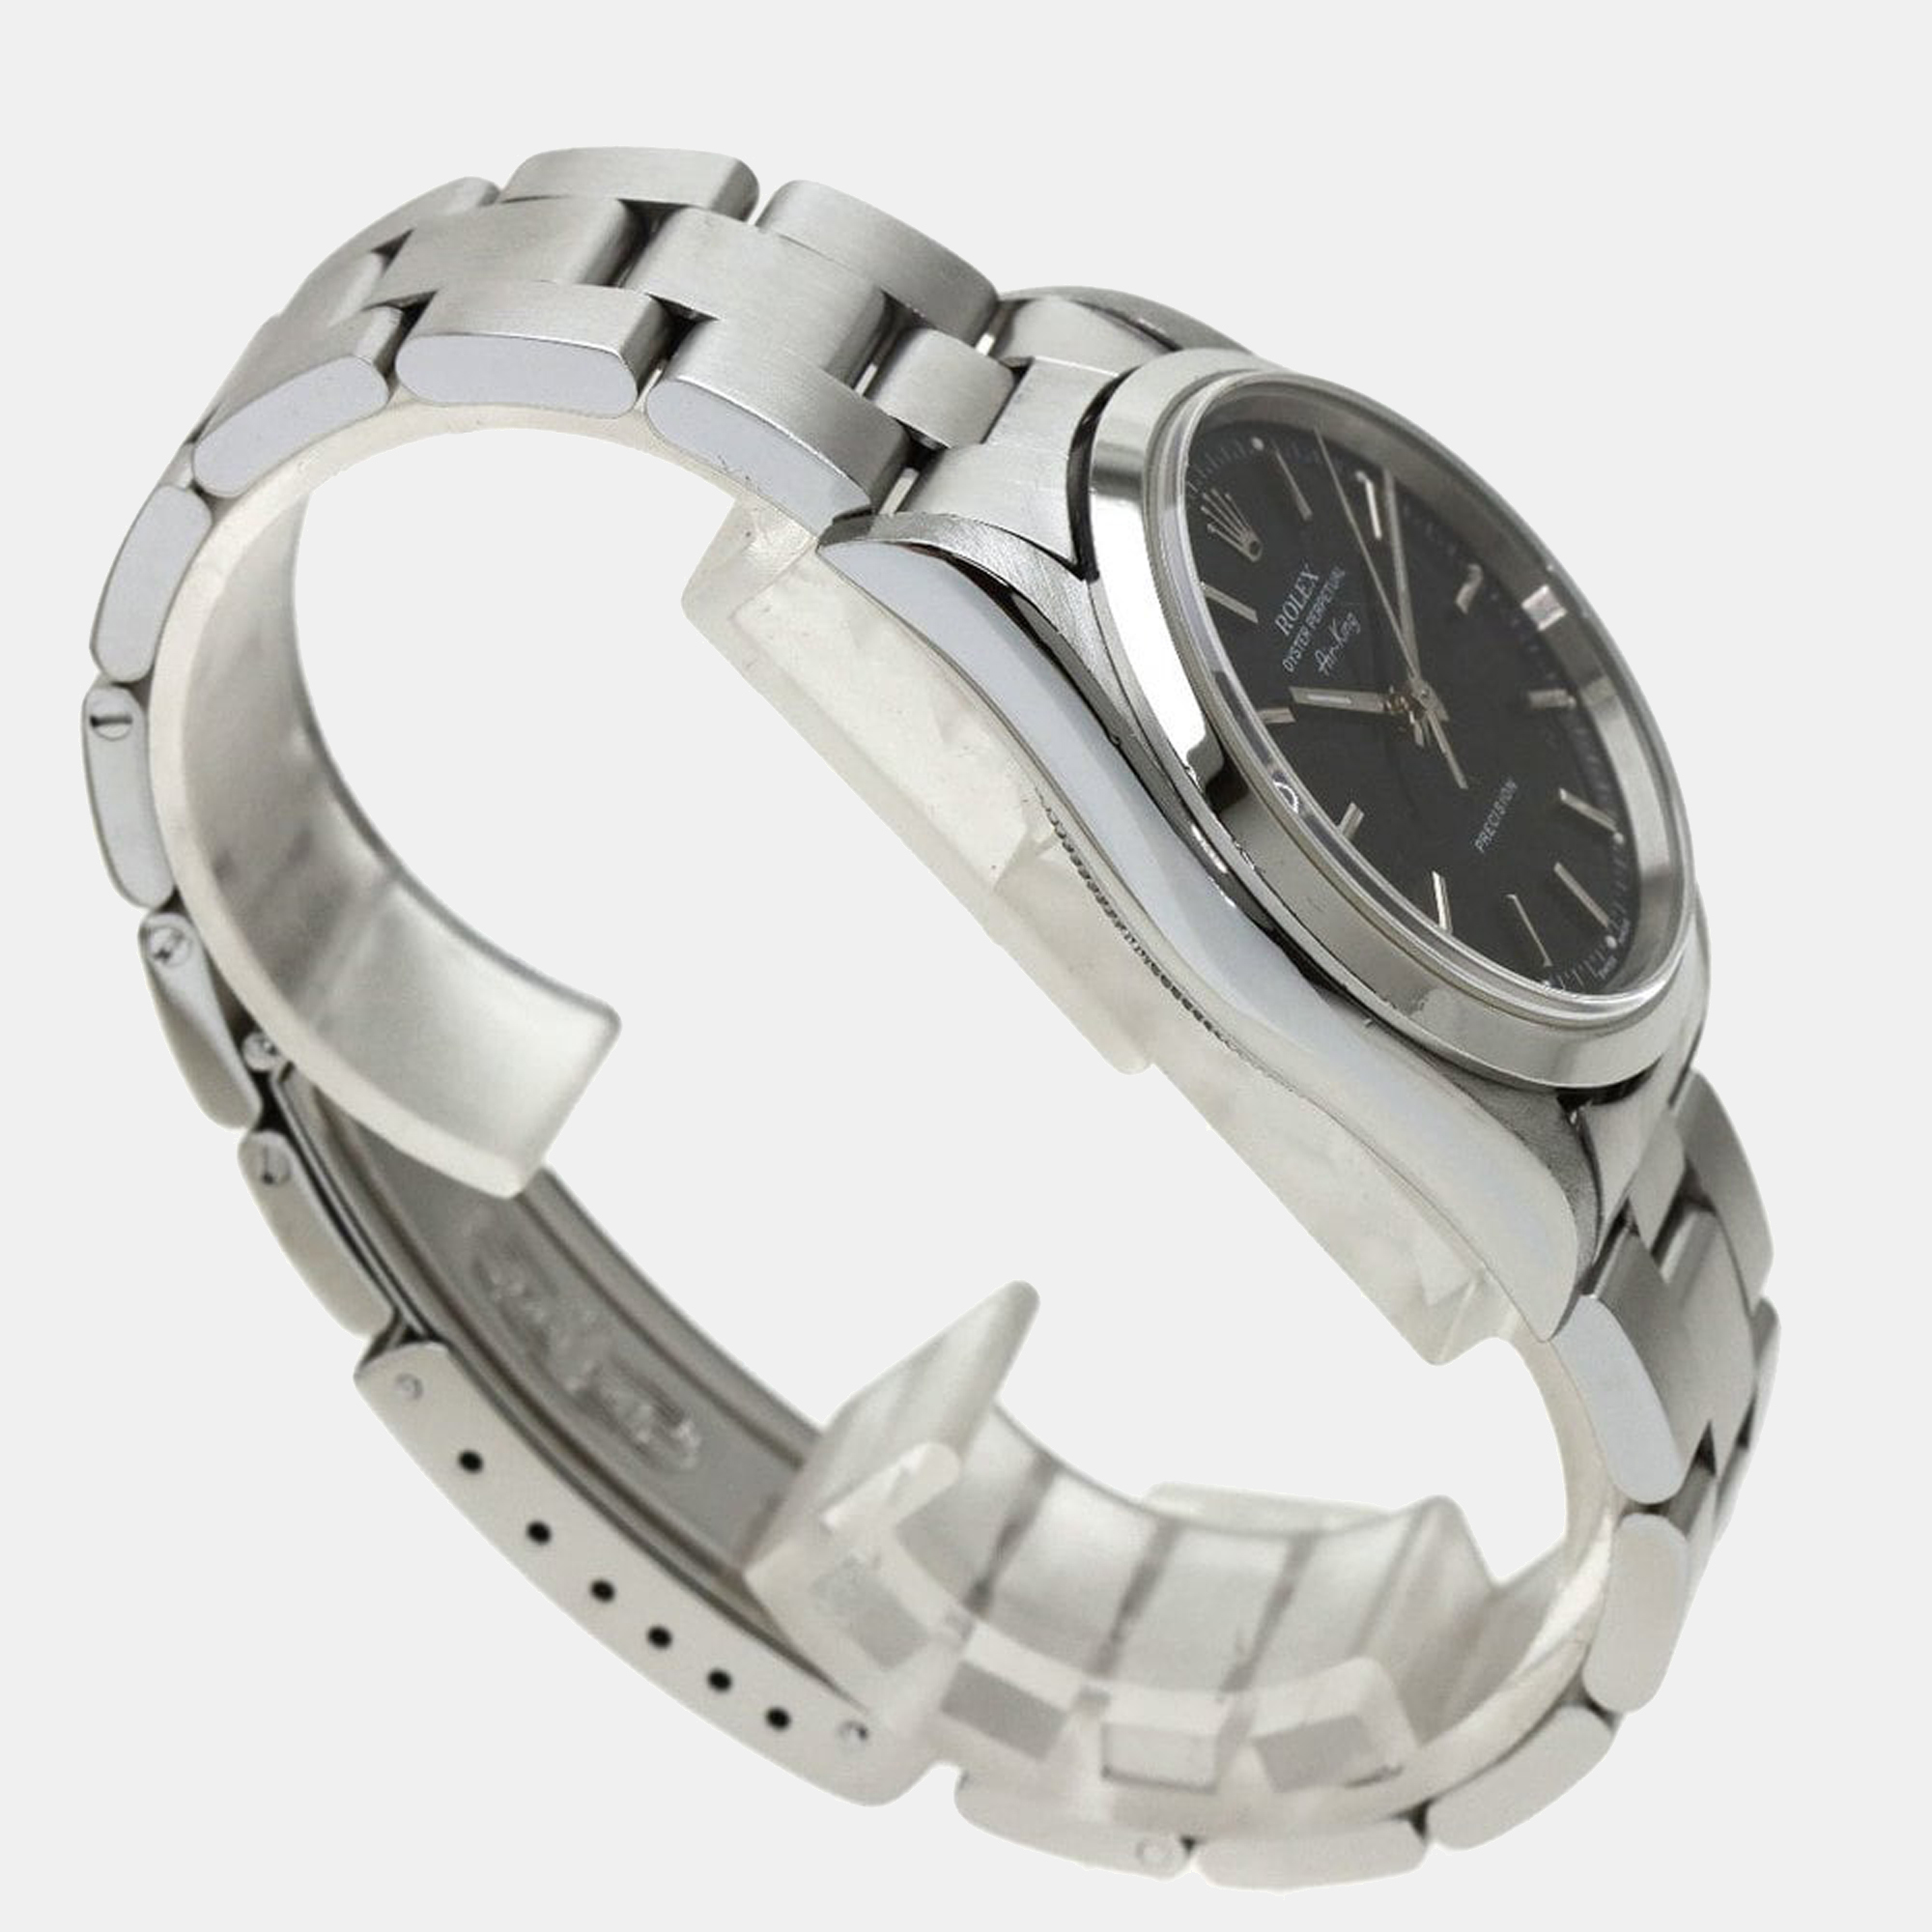 Rolex Black Stainless Steel Air-King 14000 Men's Wristwatch 34 Mm